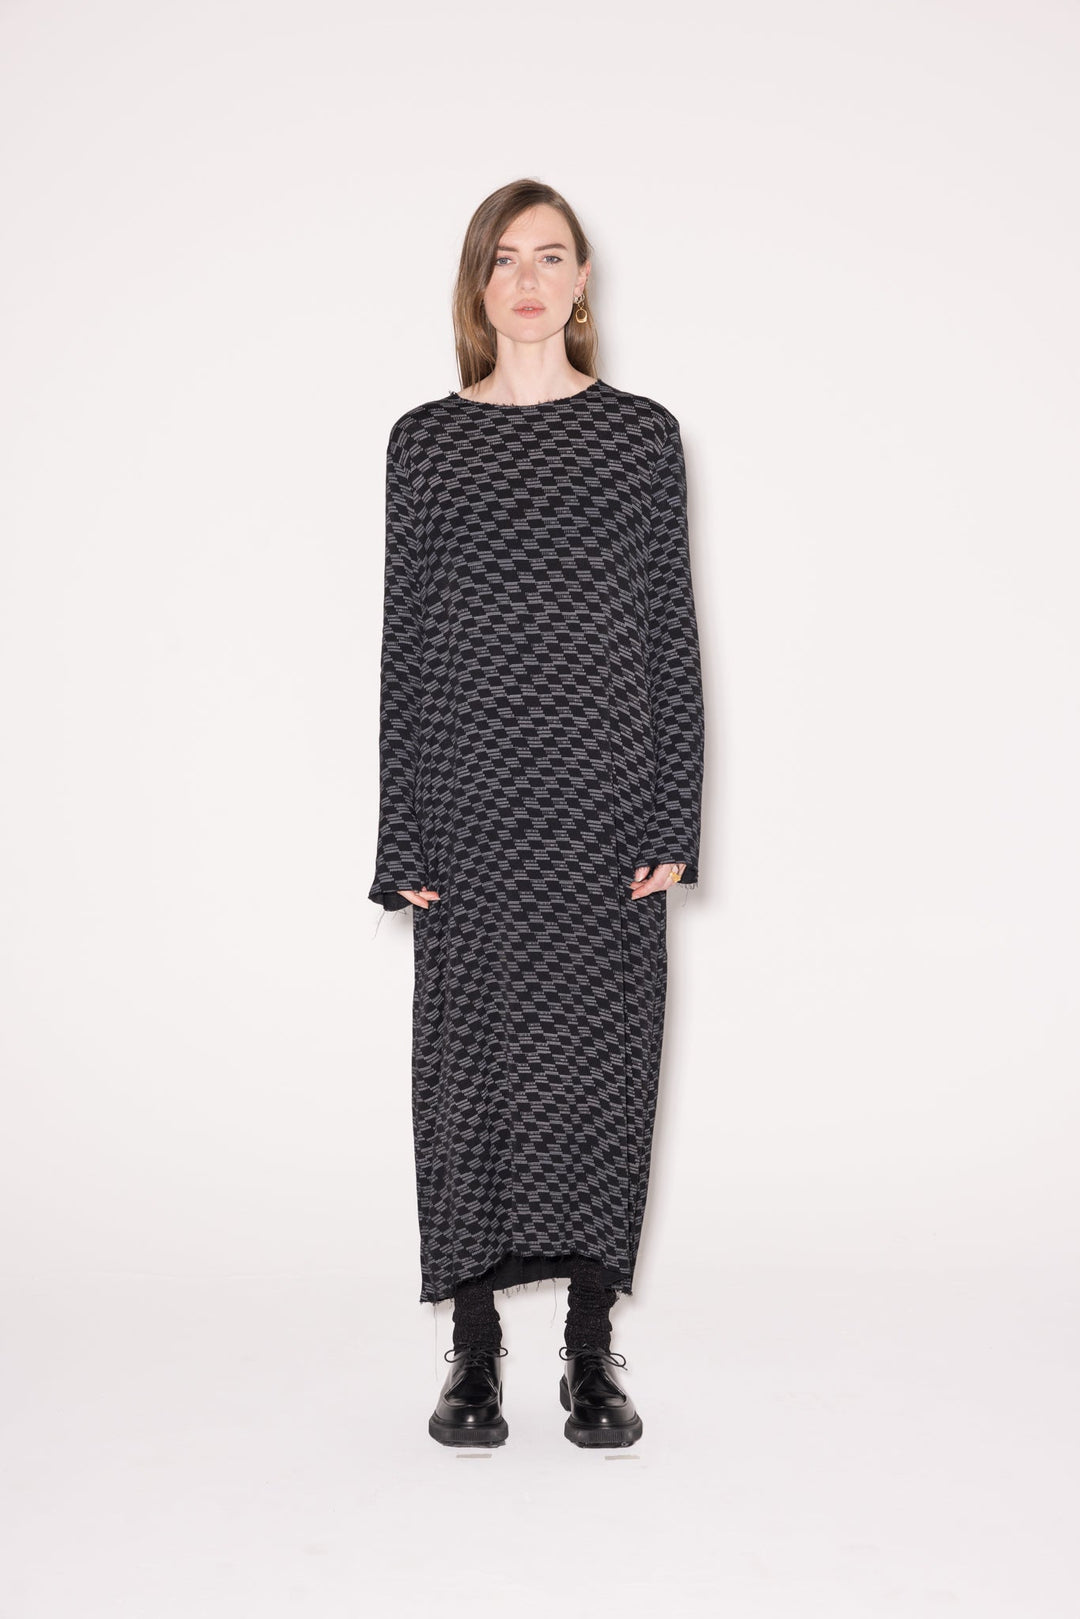 Yin Dress - Black/Grey Code - Chillis & More NZ